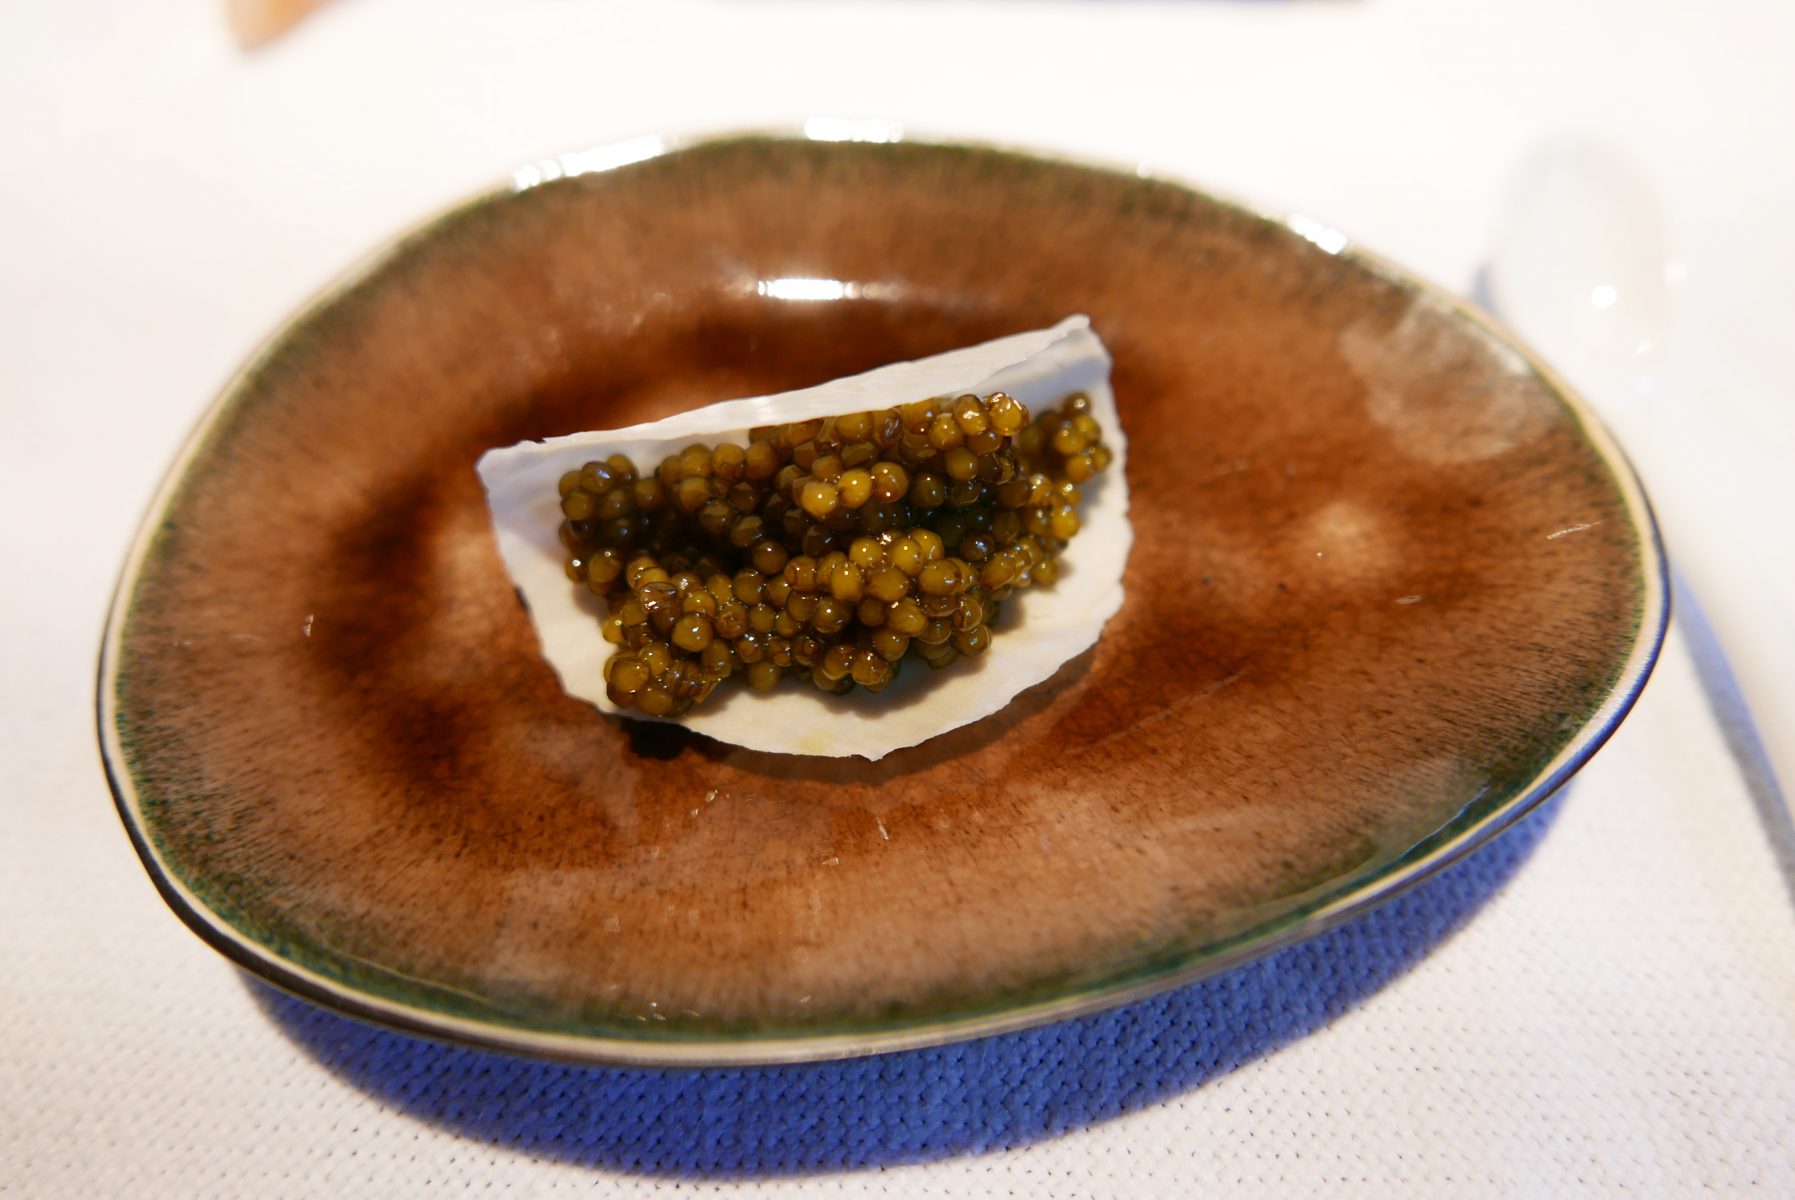 Charcoal grilled caviar at Etxebarri, Atxondo.